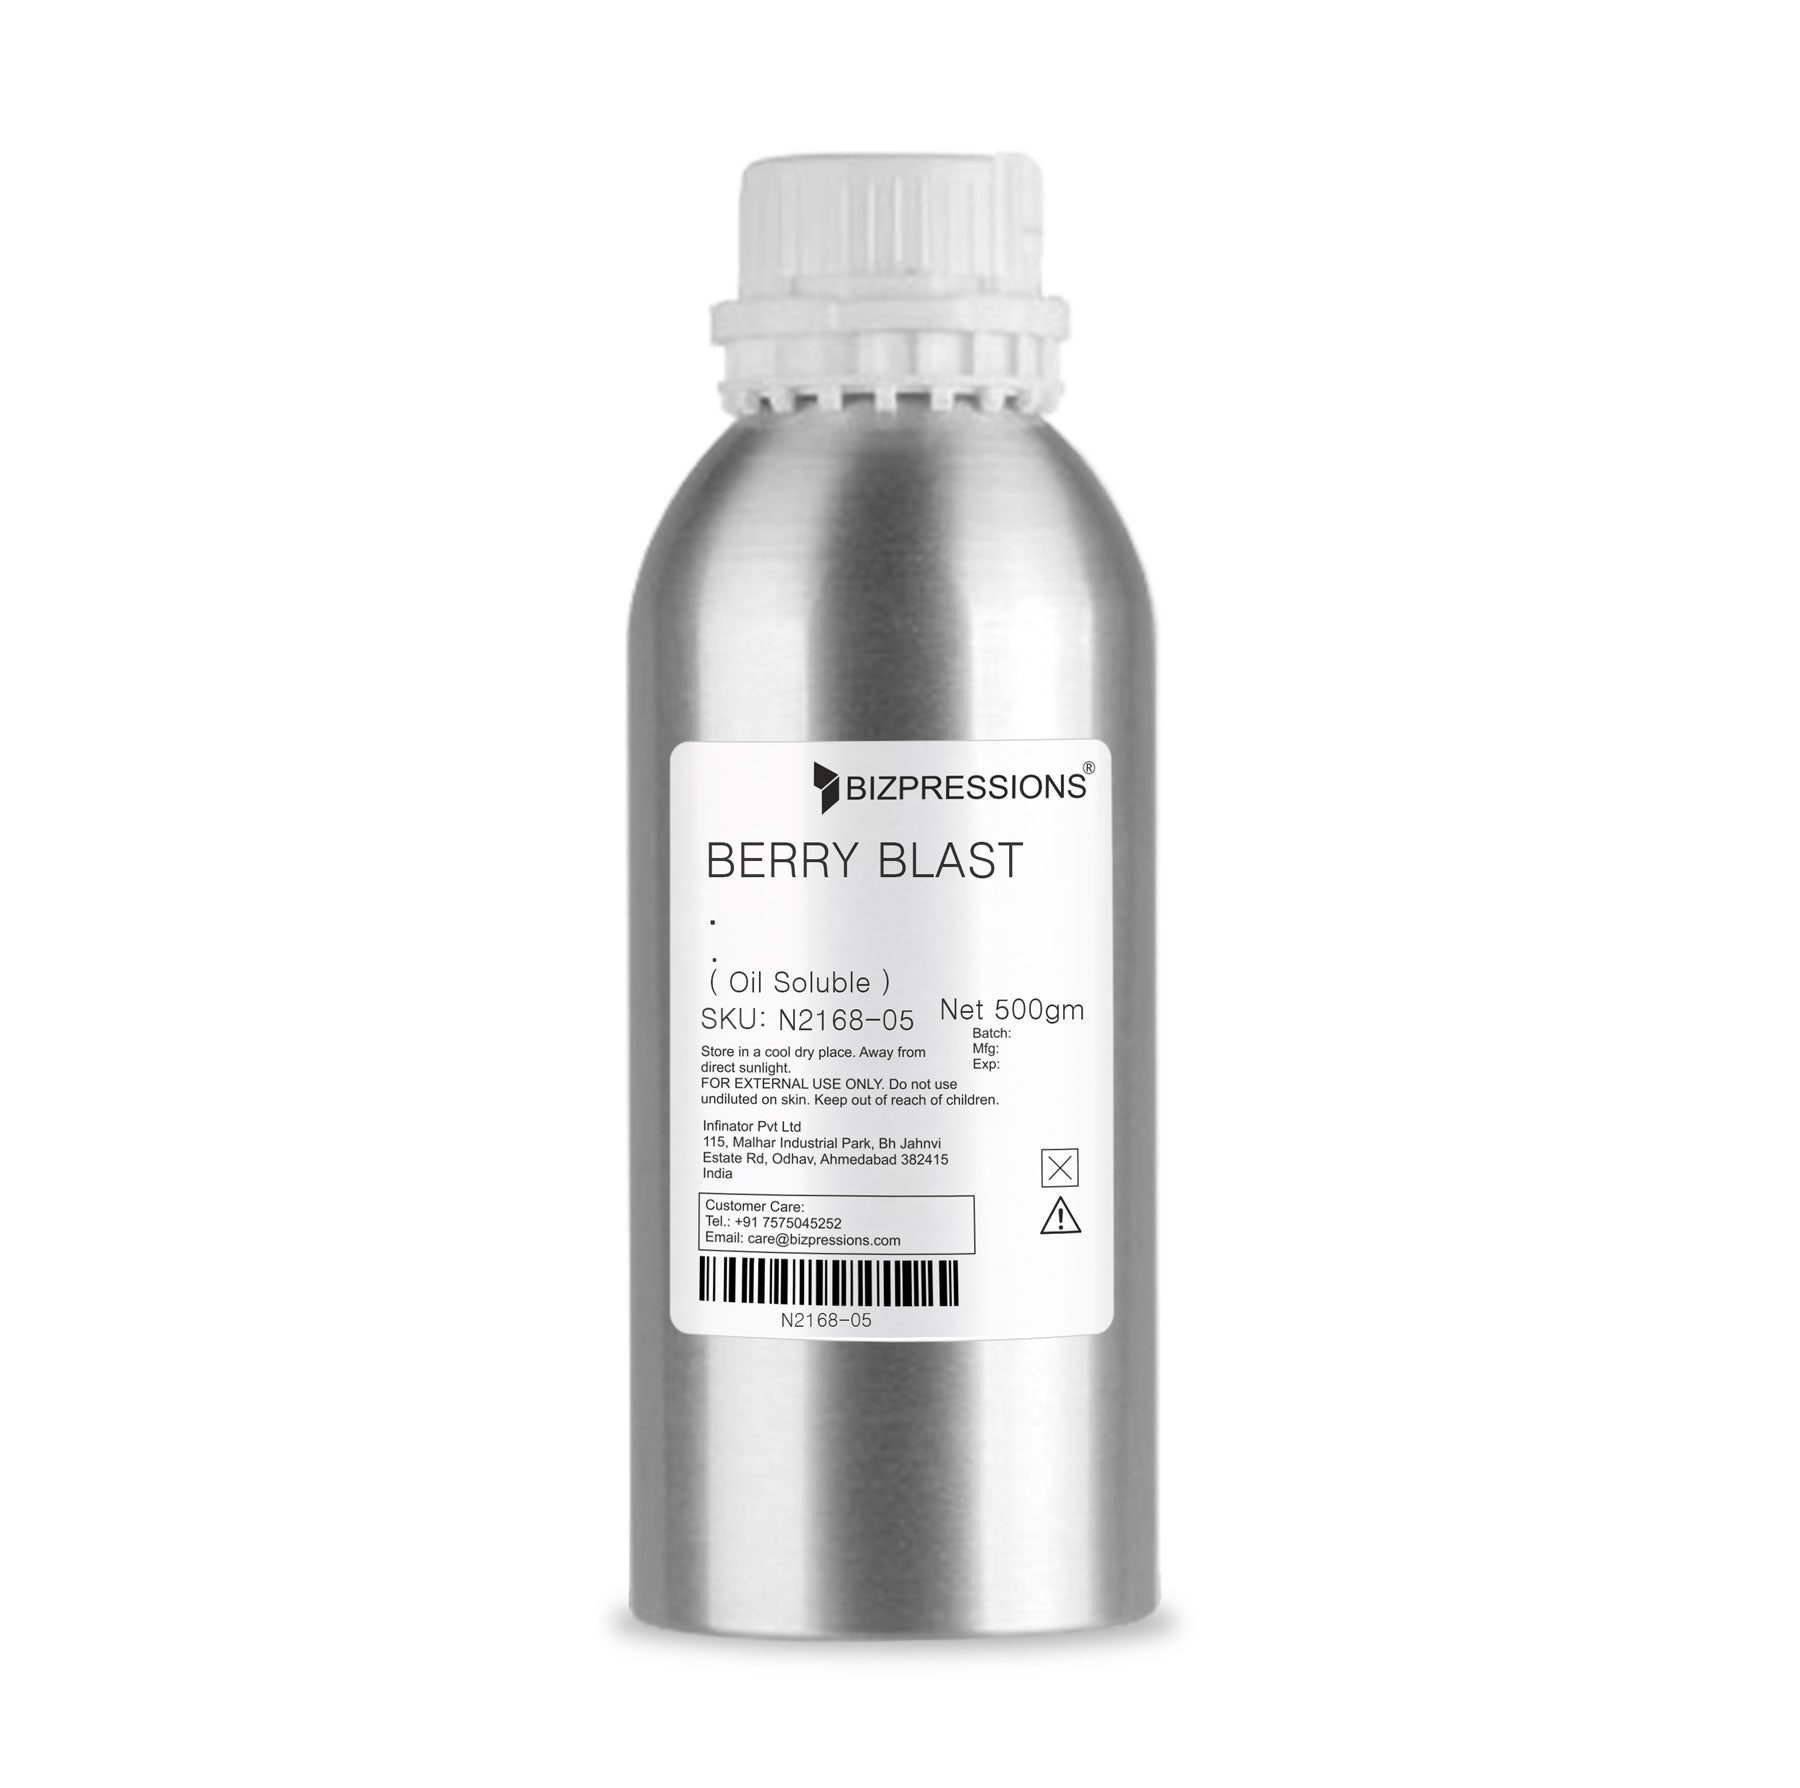 BERRY BLAST - Fragrance ( Oil Soluble ) - 500 gm